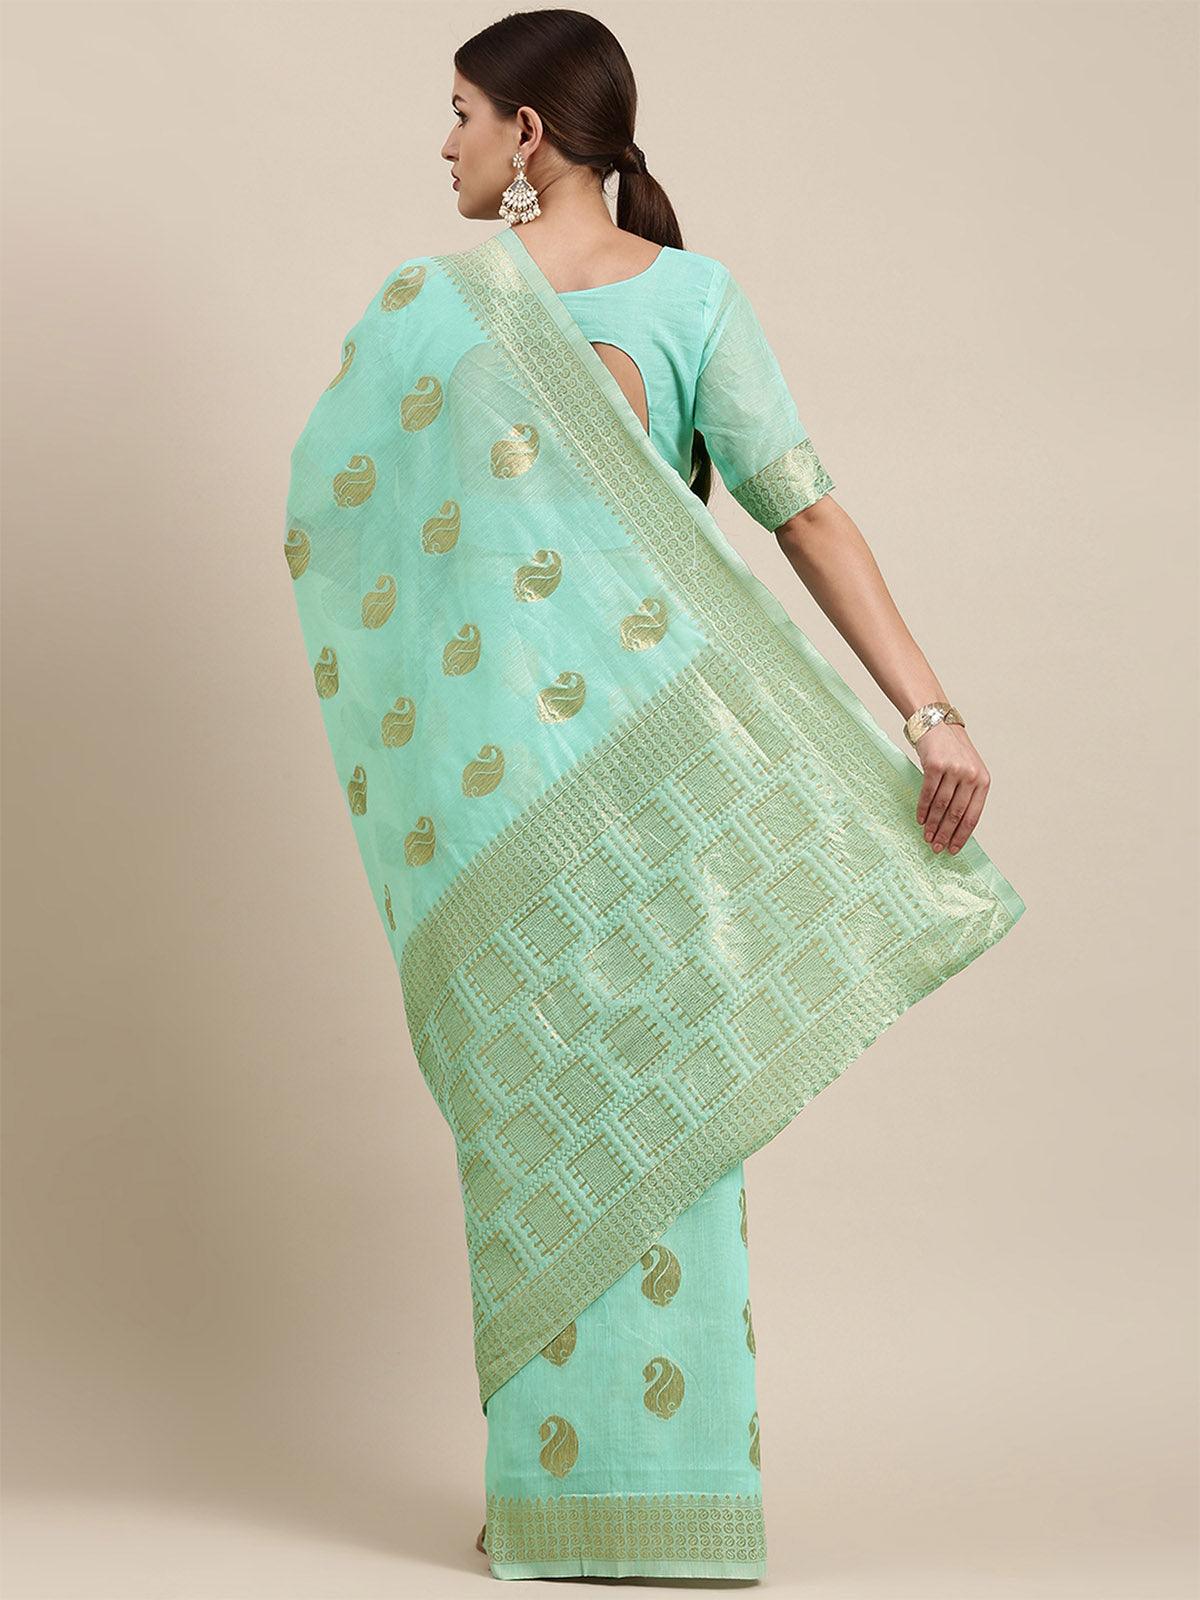 Women's Linen Blend Sea Green Woven Design Designer Saree With Blouse Piece - Odette